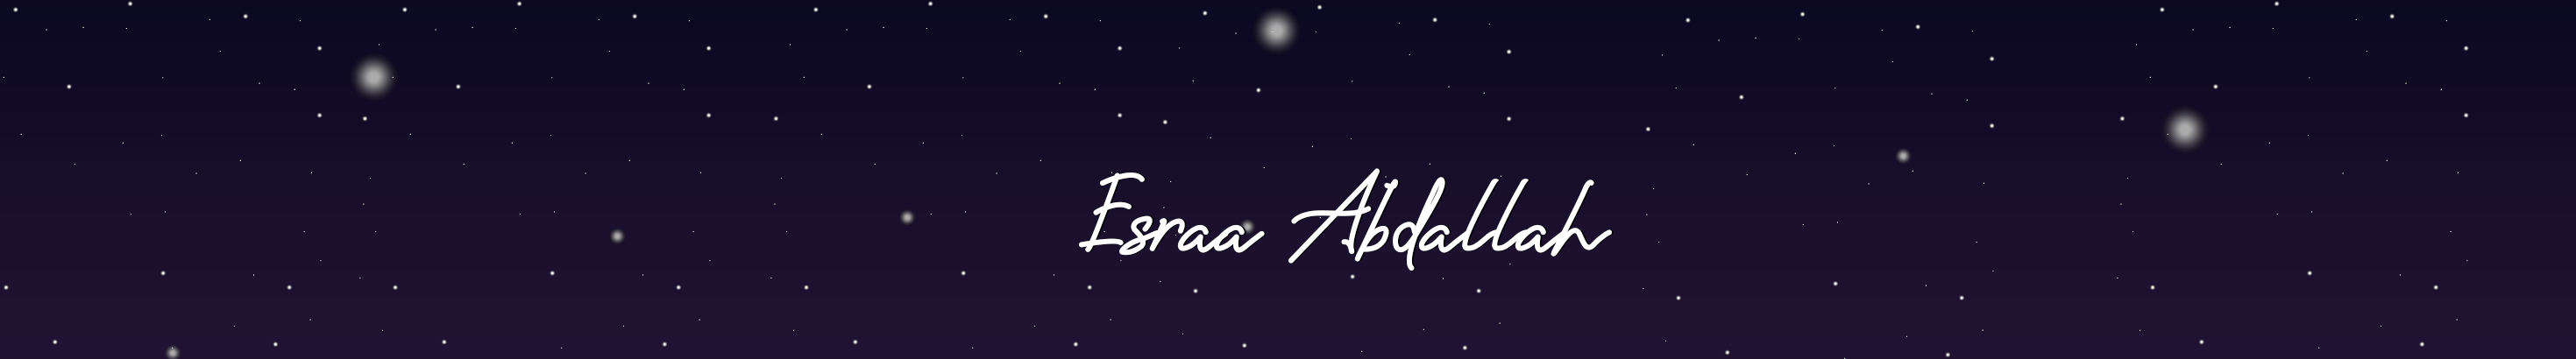 Esraa abdallah's profile banner